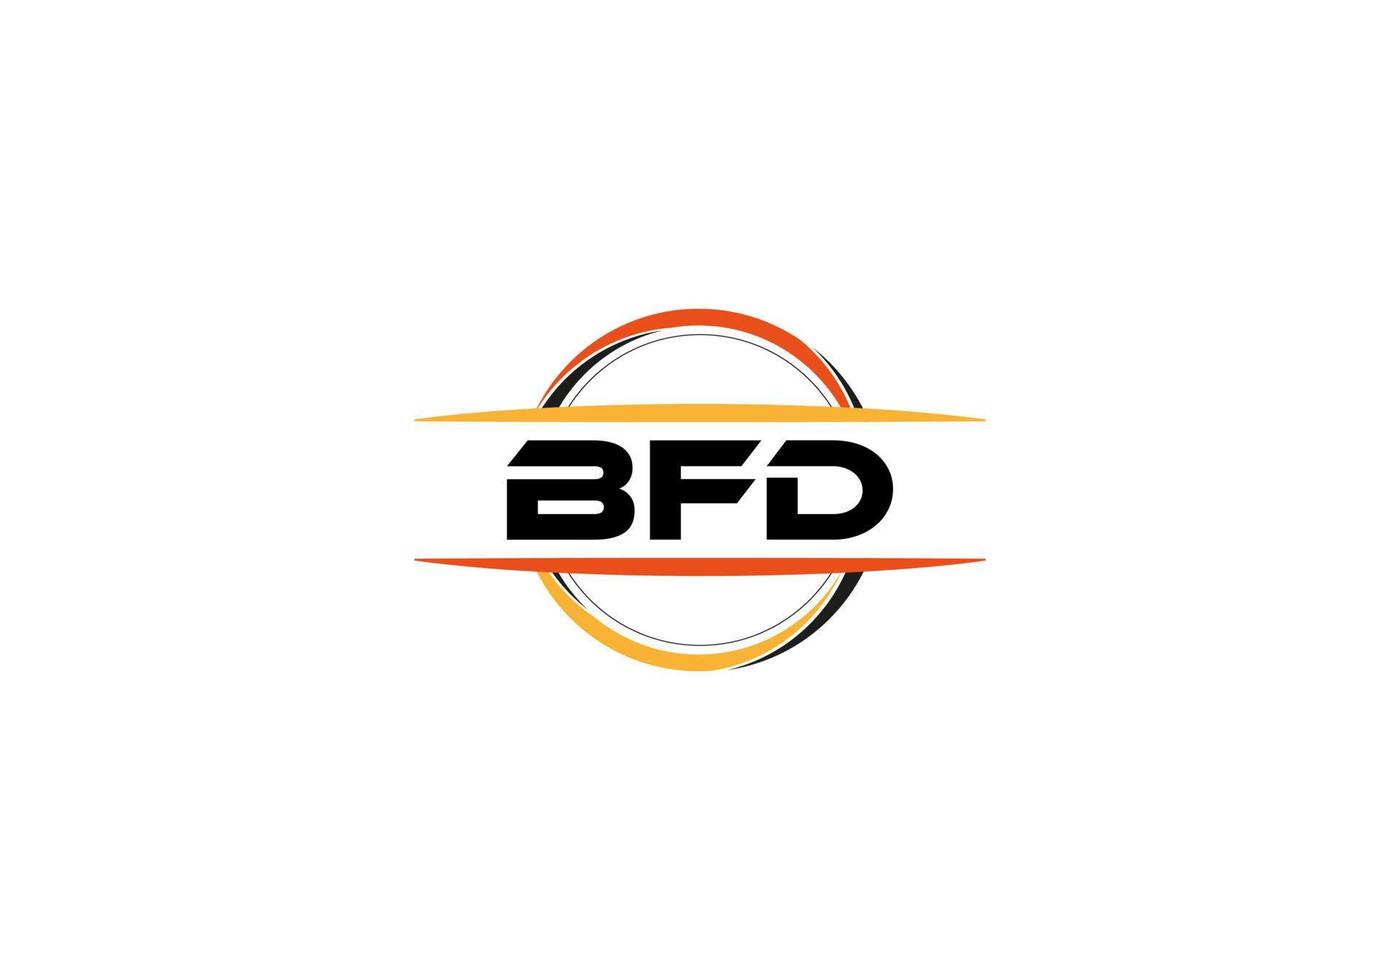 bdf letra realeza elipse forma logo. bdf cepillo Arte logo. bdf logo para un compañía, negocio, y comercial usar. vector